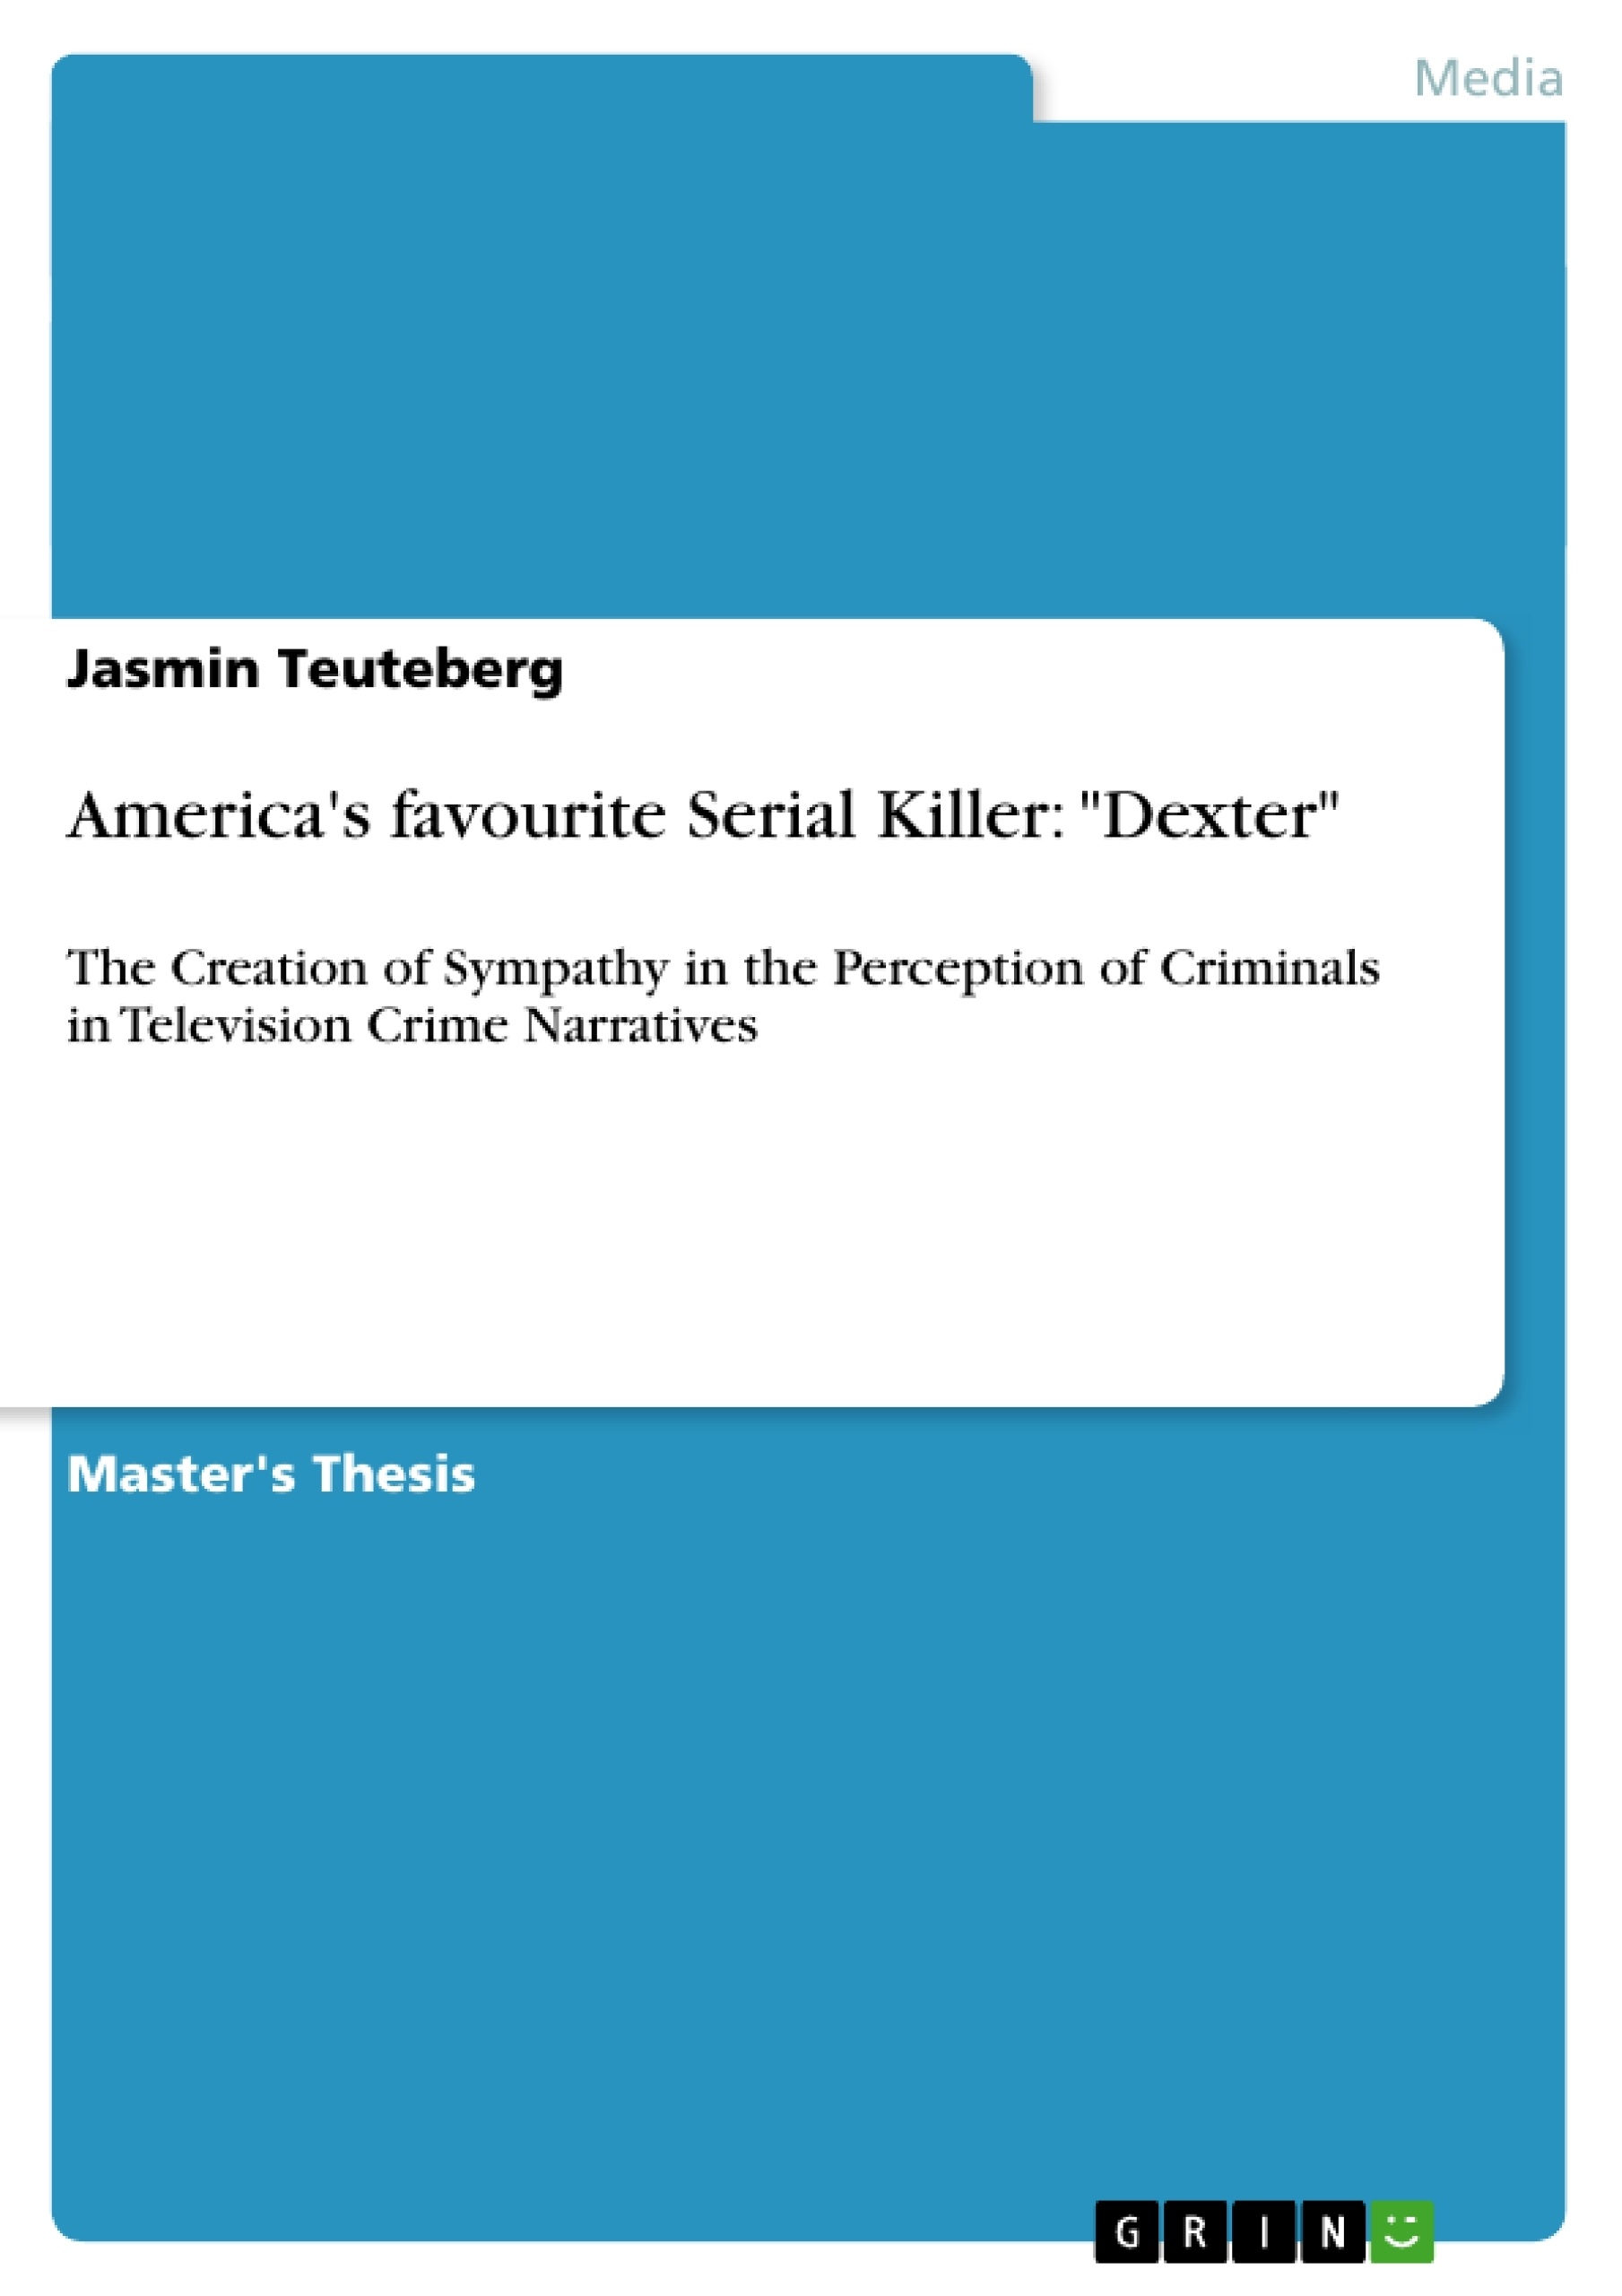 Title: America's favourite Serial Killer: "Dexter"